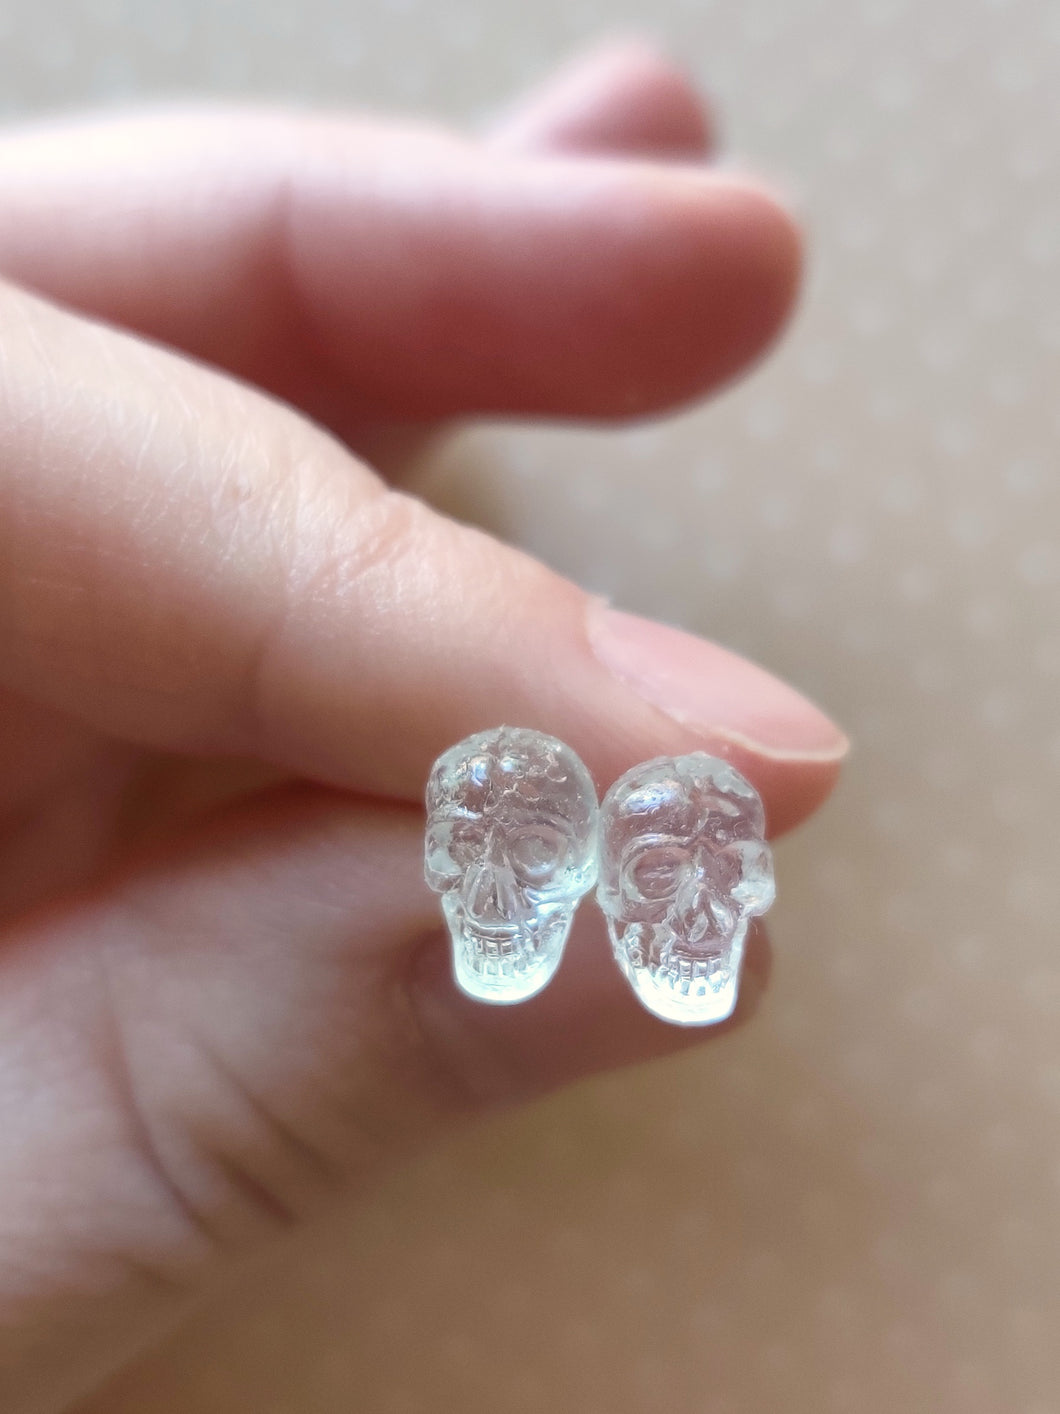 One pair of clear skull stud earrings held between finger and thumb.